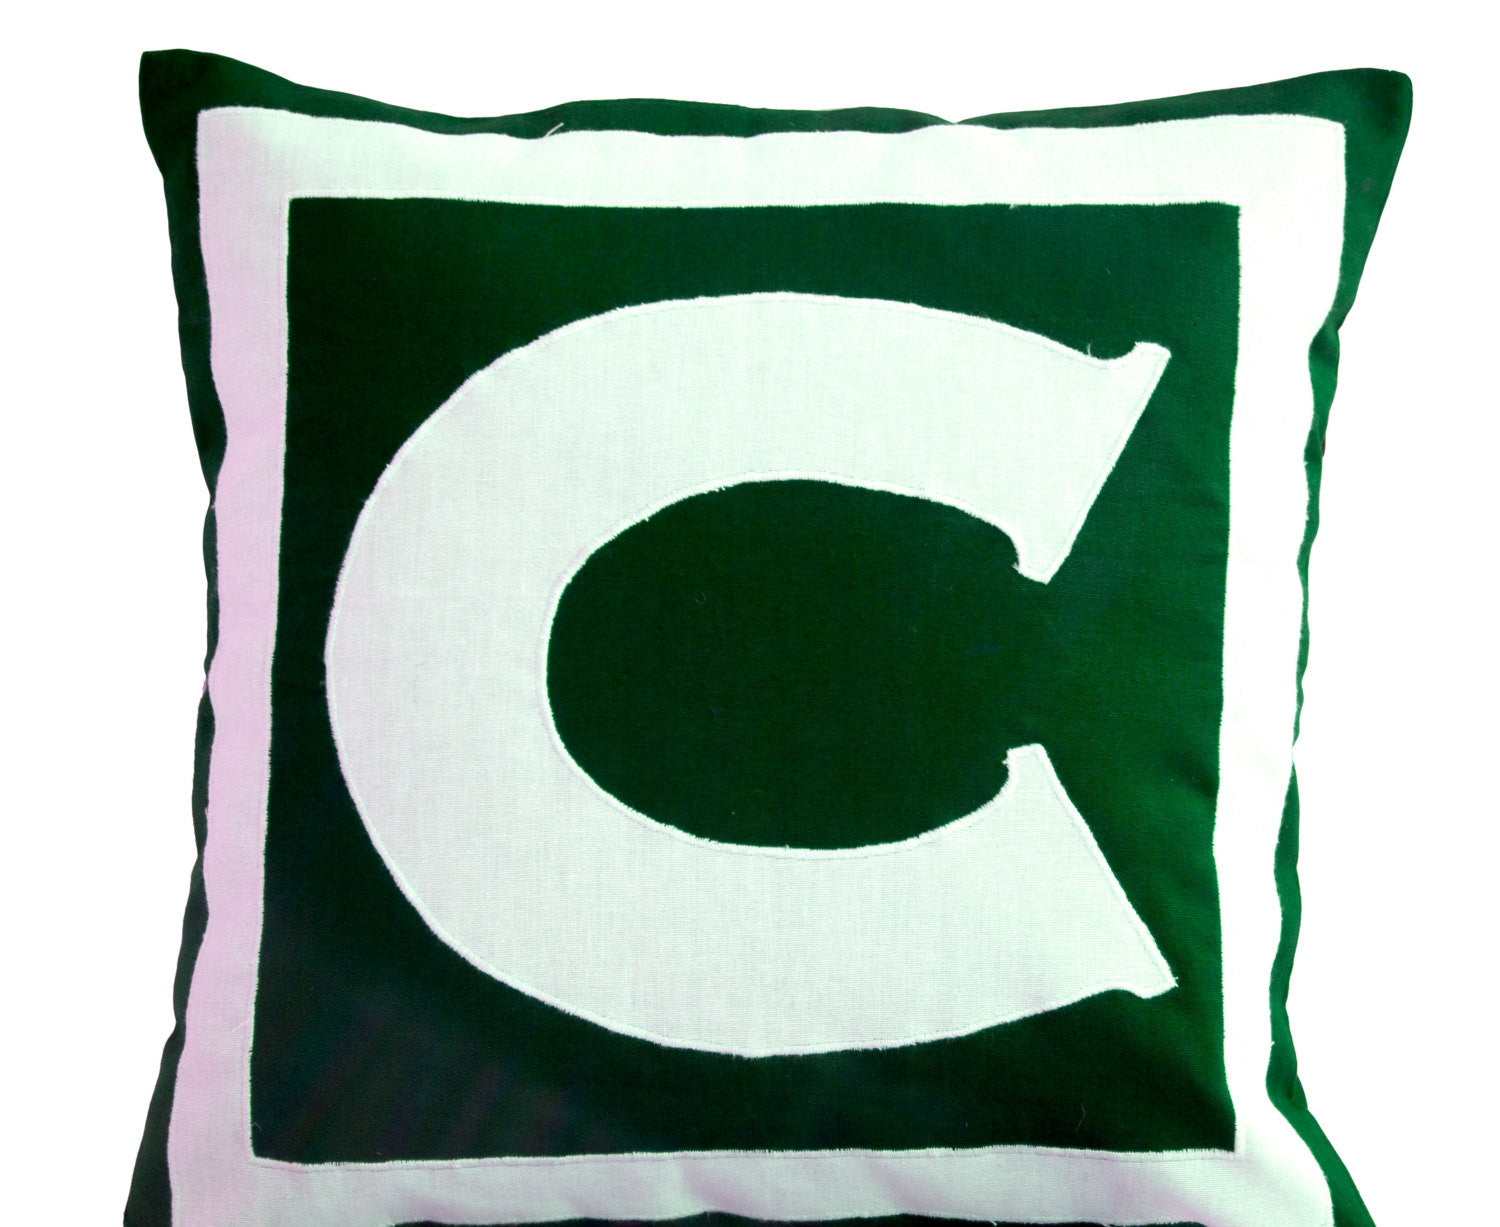 Handmade green throw pillow with monogram